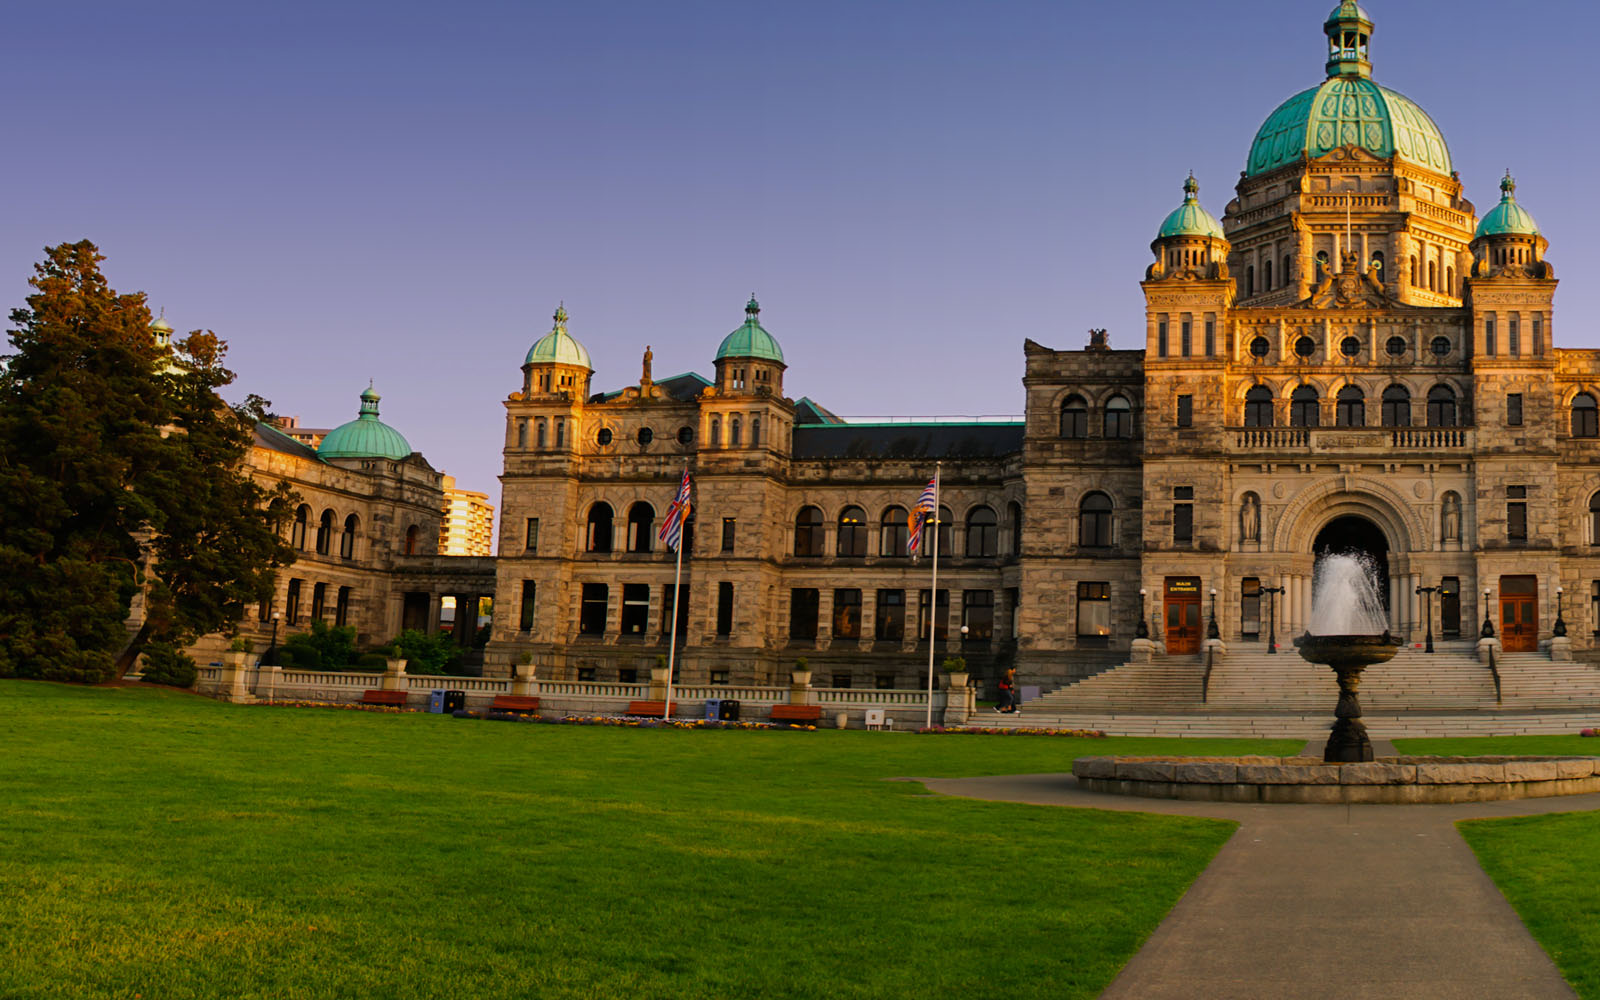 British Columbia Provincial Parliament Building